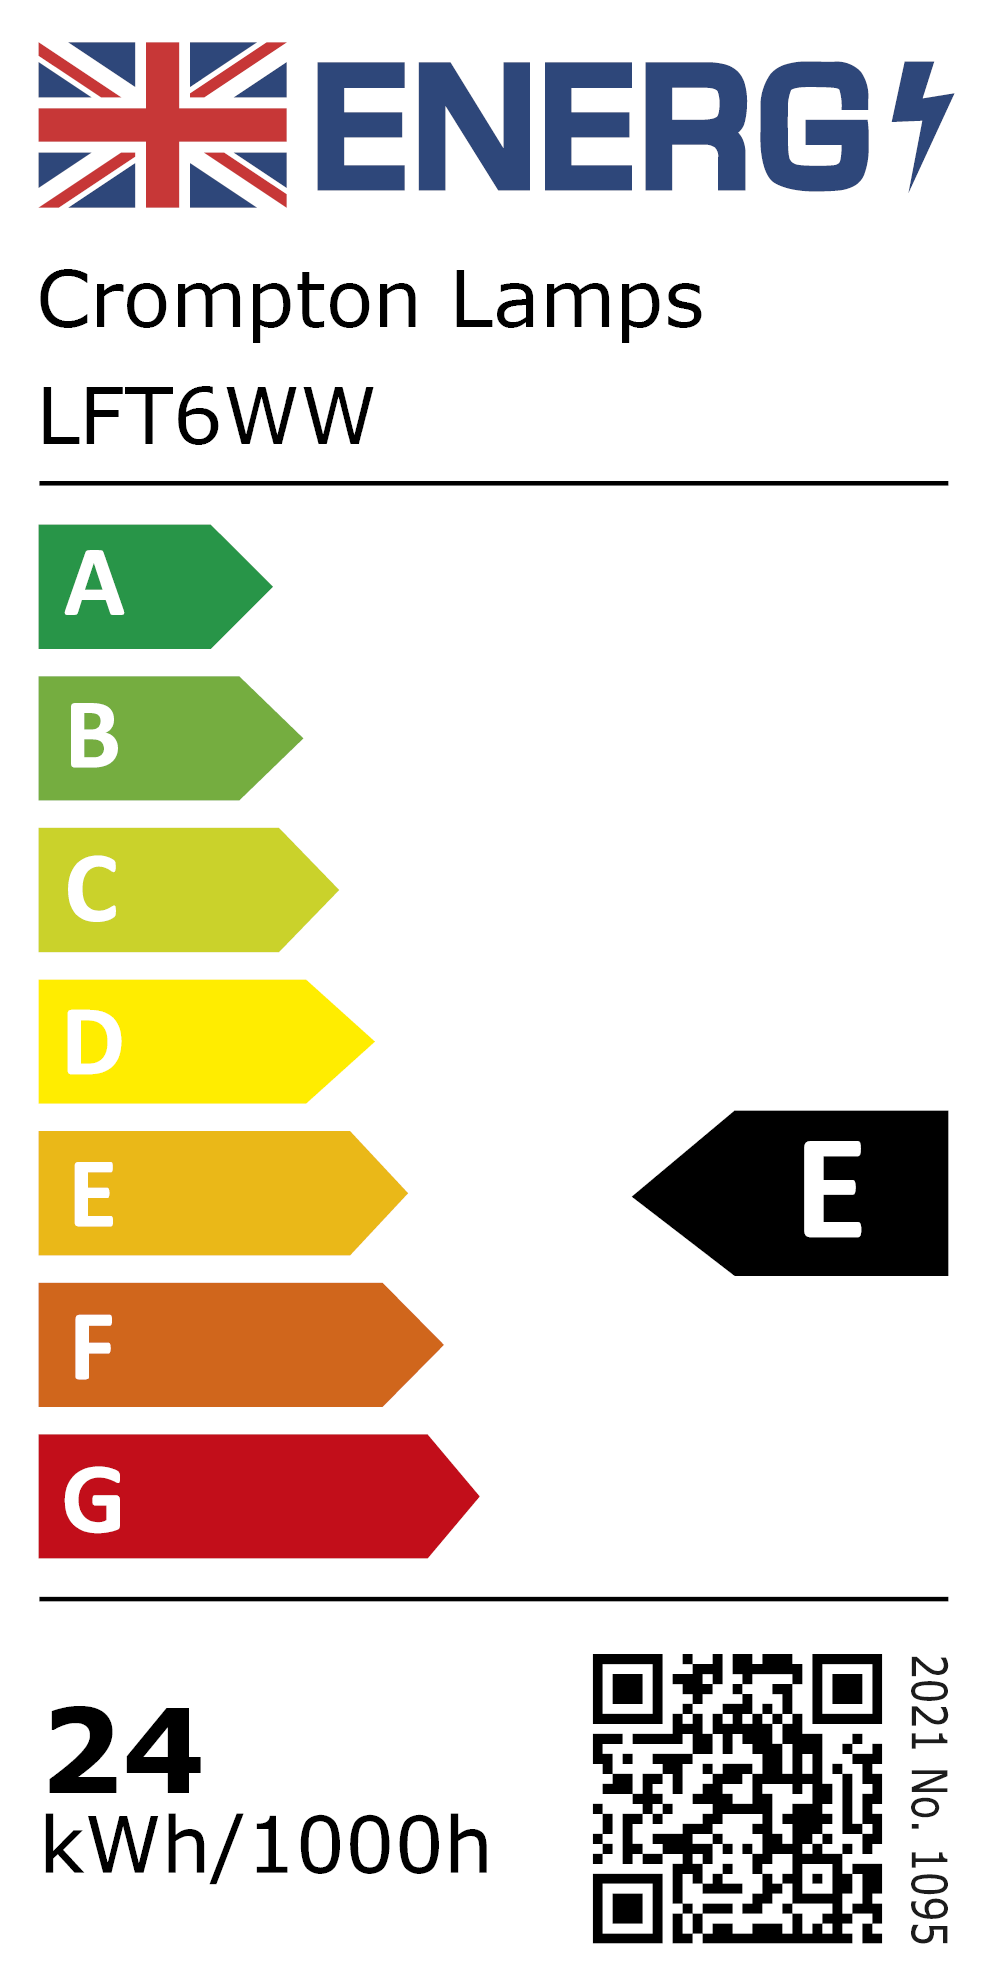 New 2021 Energy Rating Label: Stock Code LFT6WW